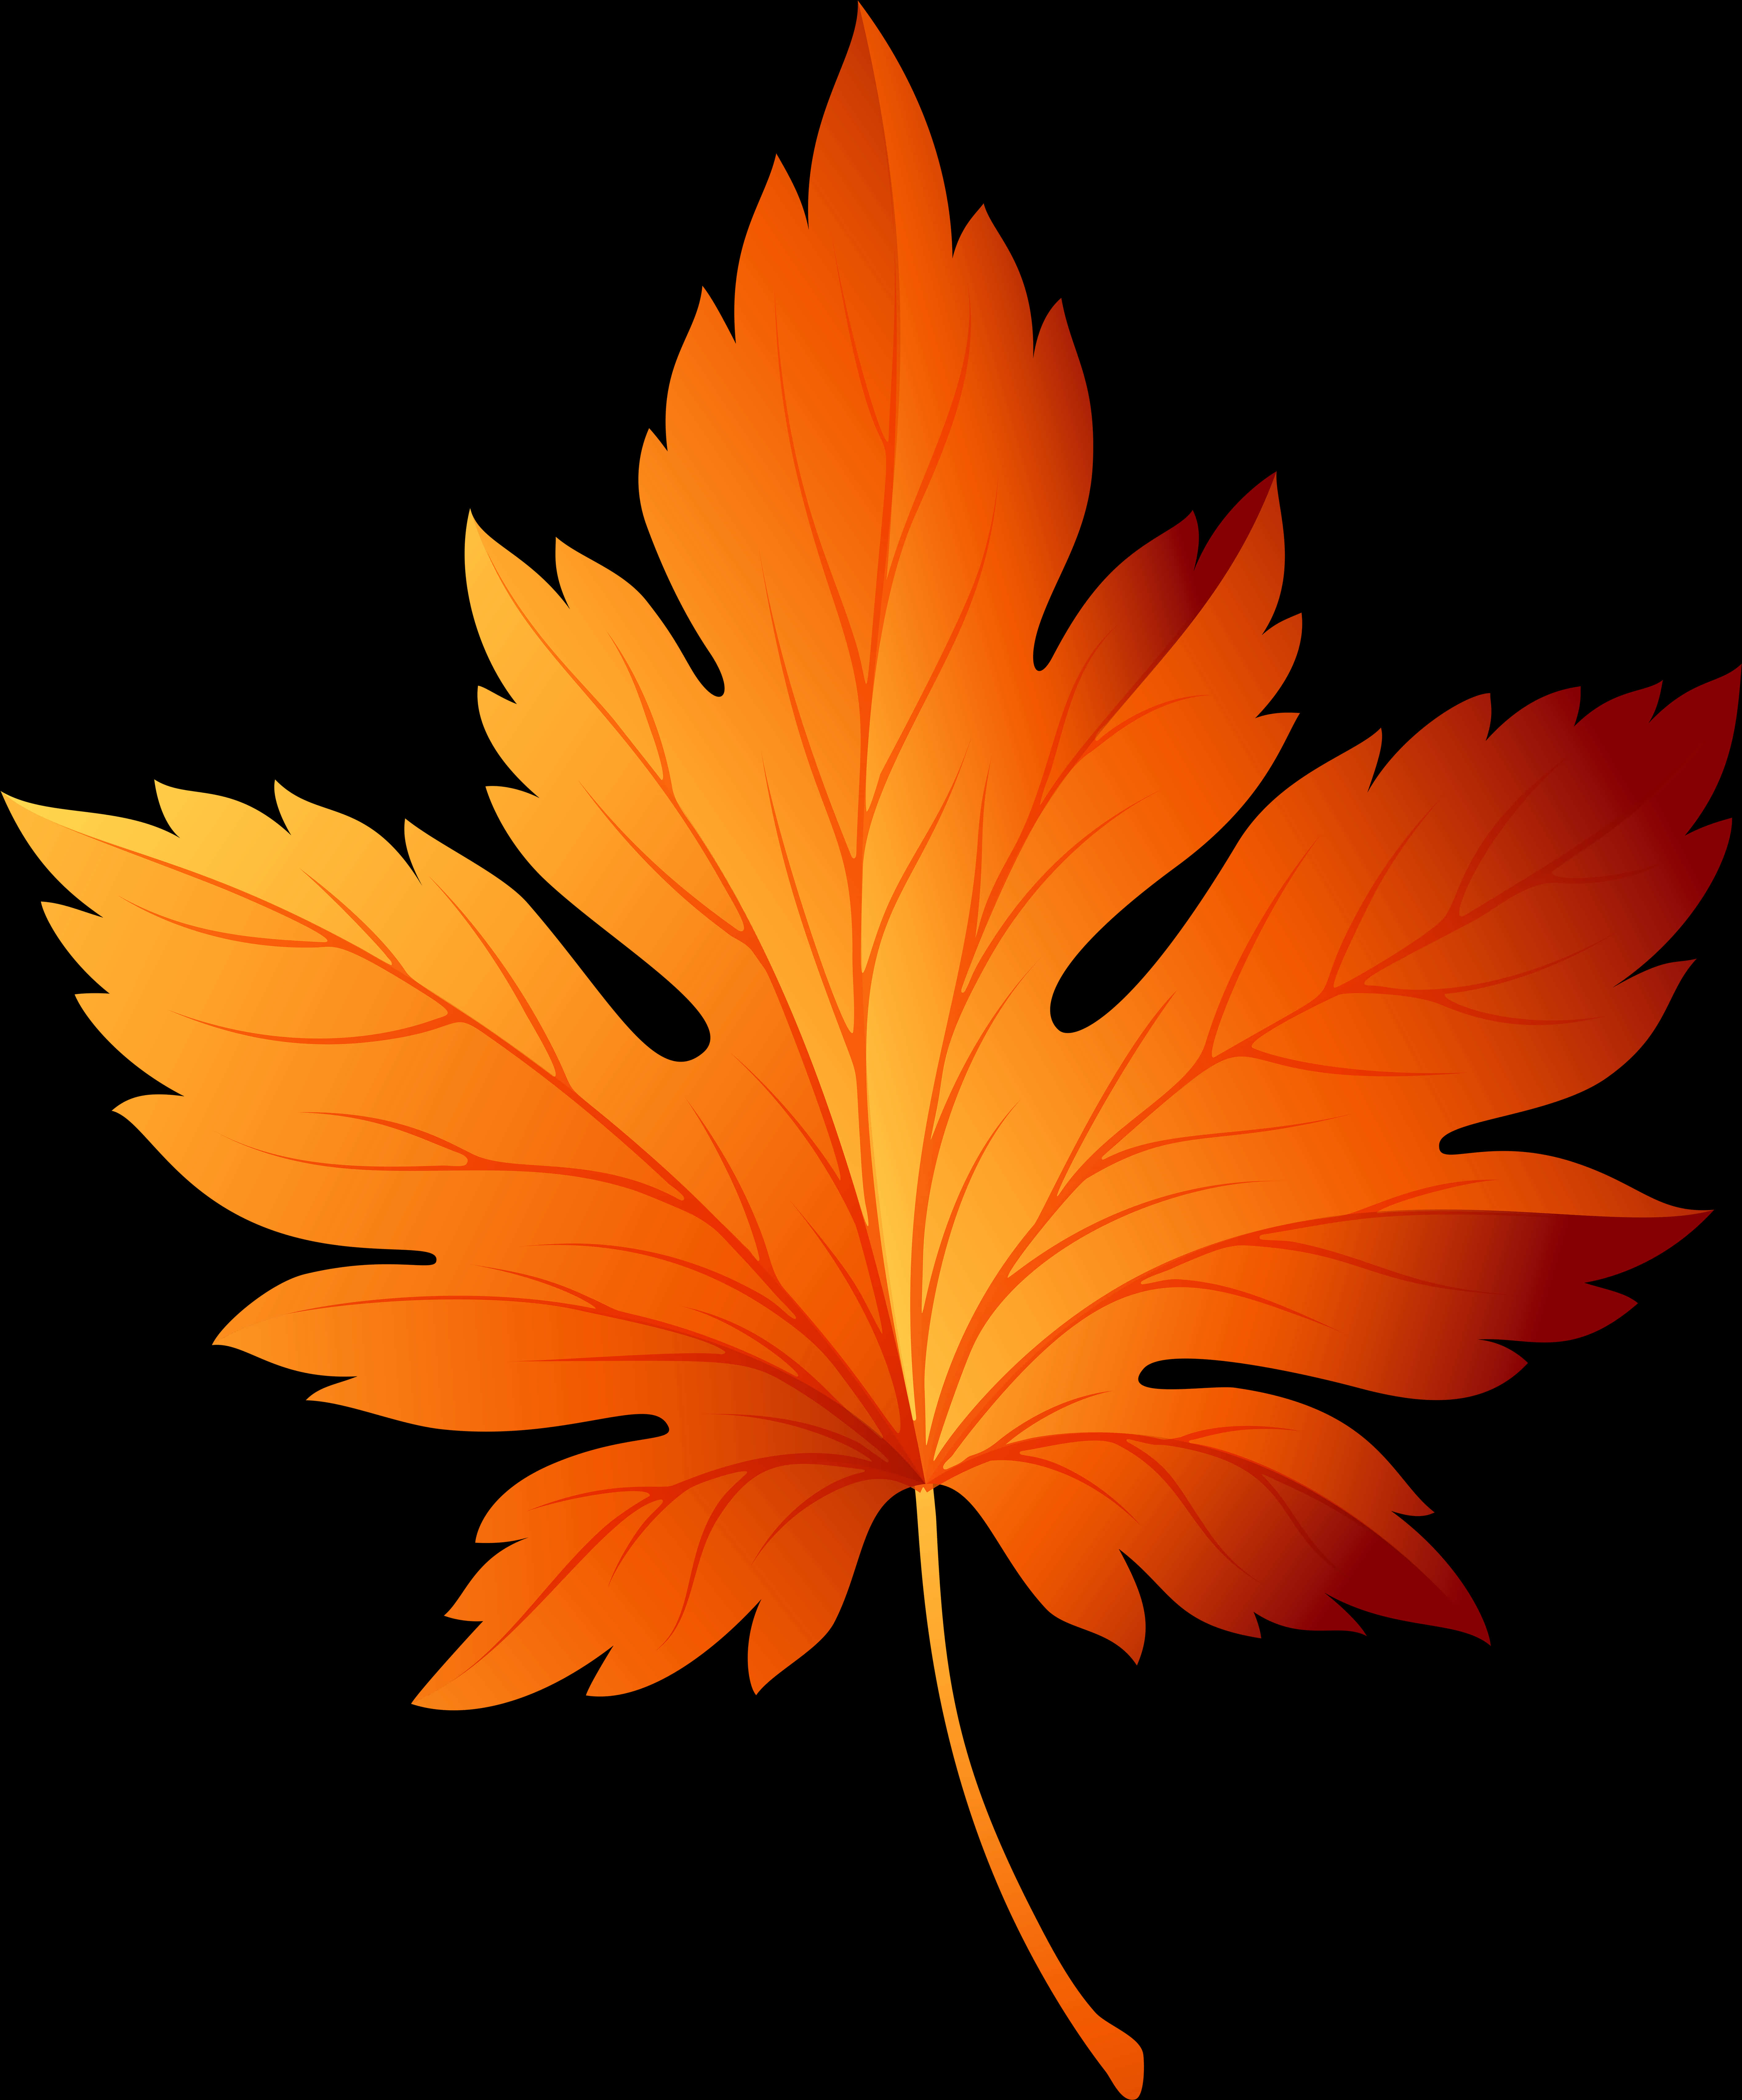 Vibrant Autumn Leaf Graphic PNG image